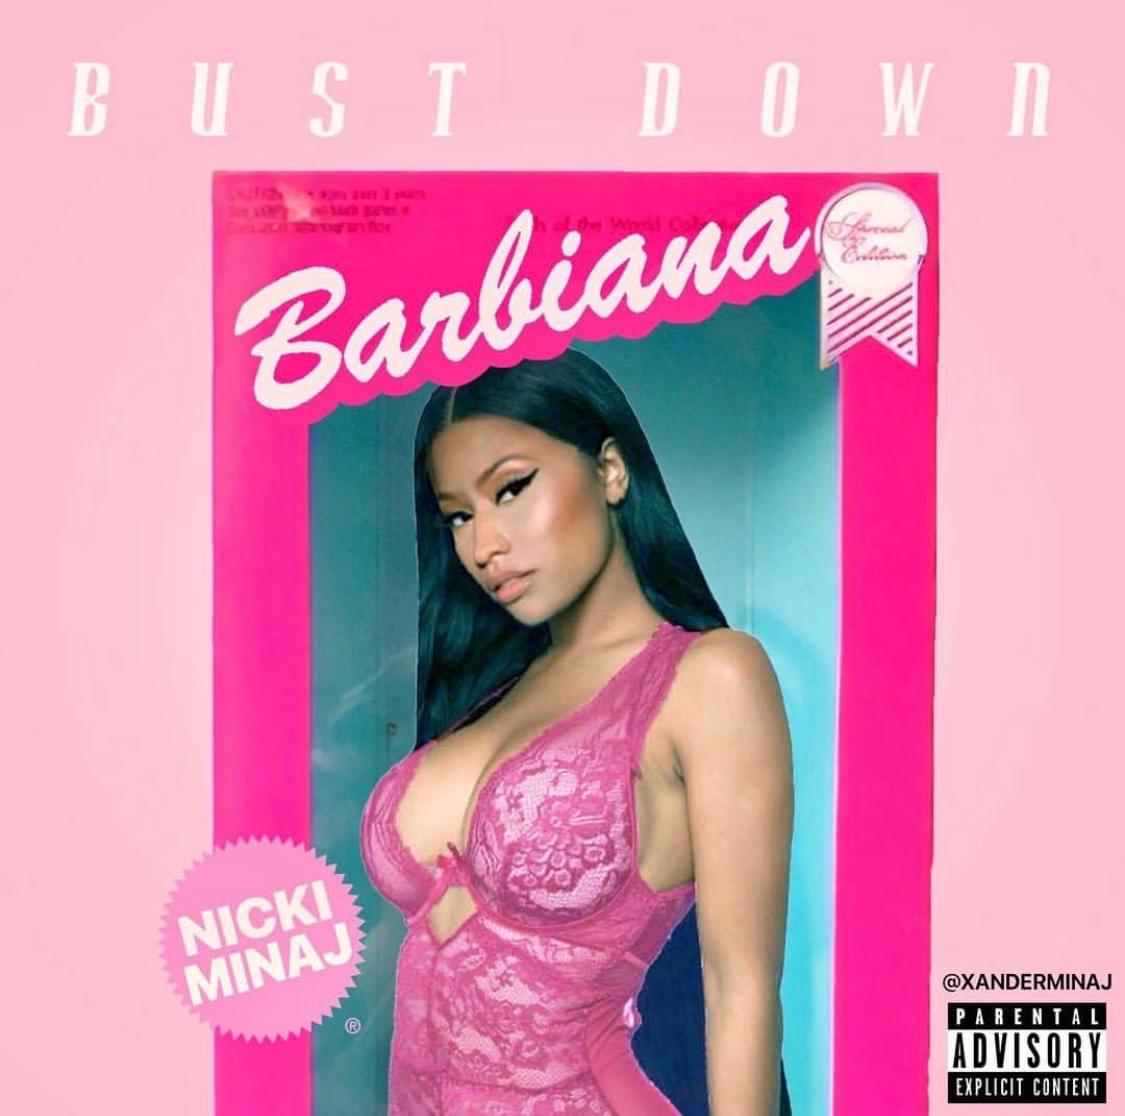 Nicki Minaj Releases “Bust Down Barbiana” Freestyle